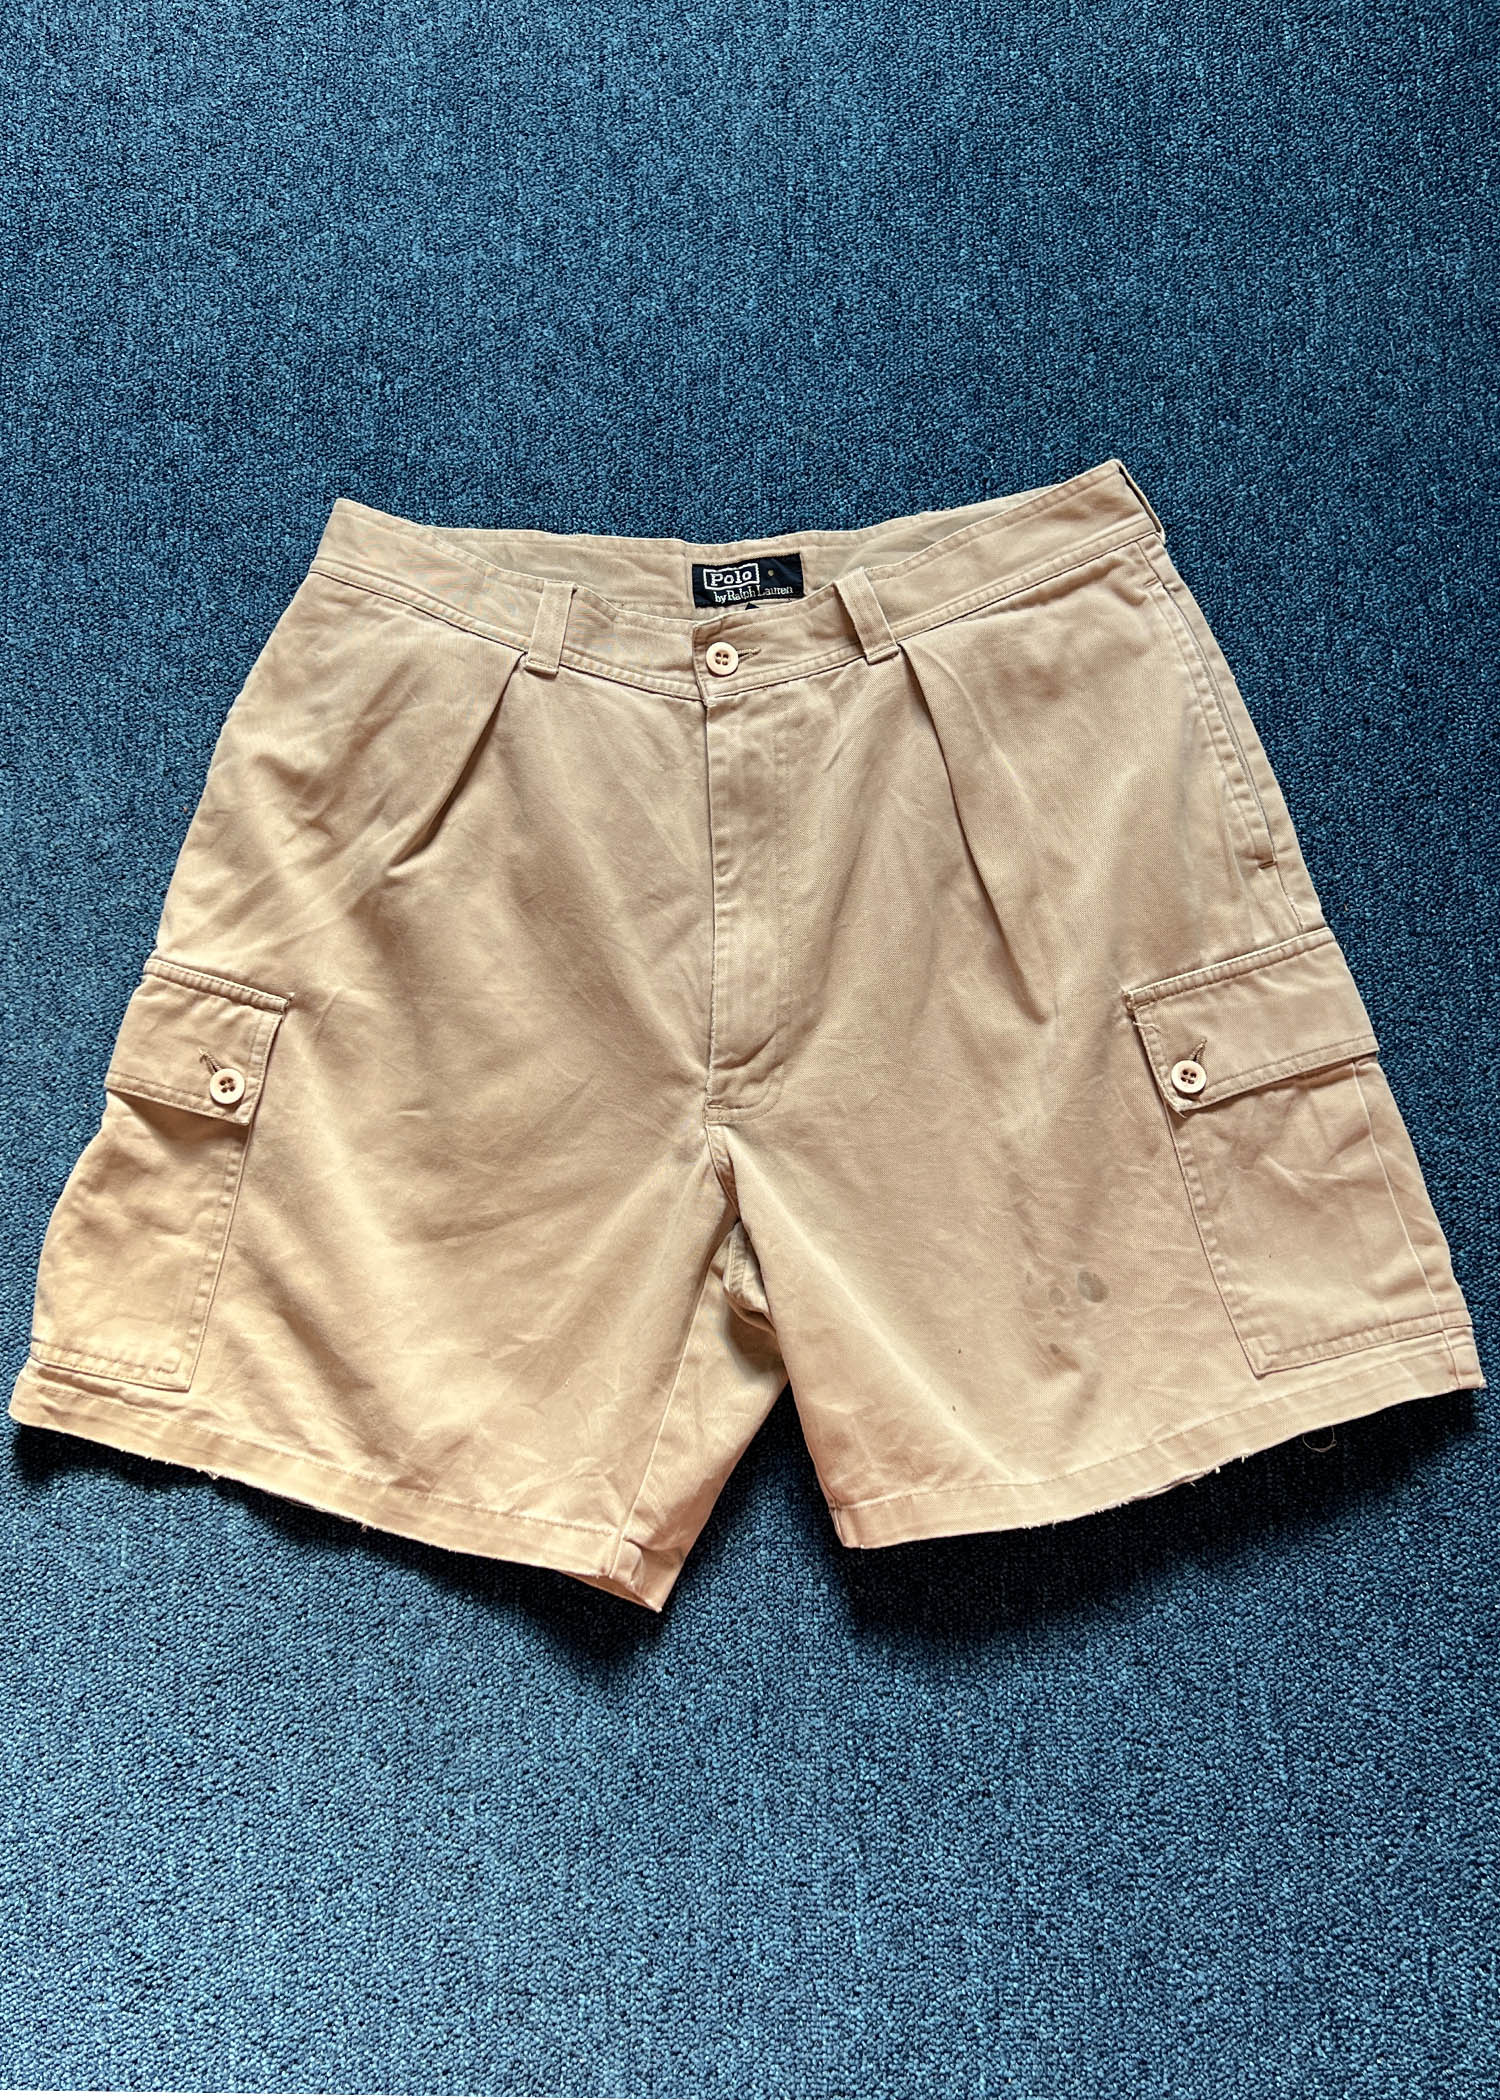 Polo by Ralph Lauren cargo shorts